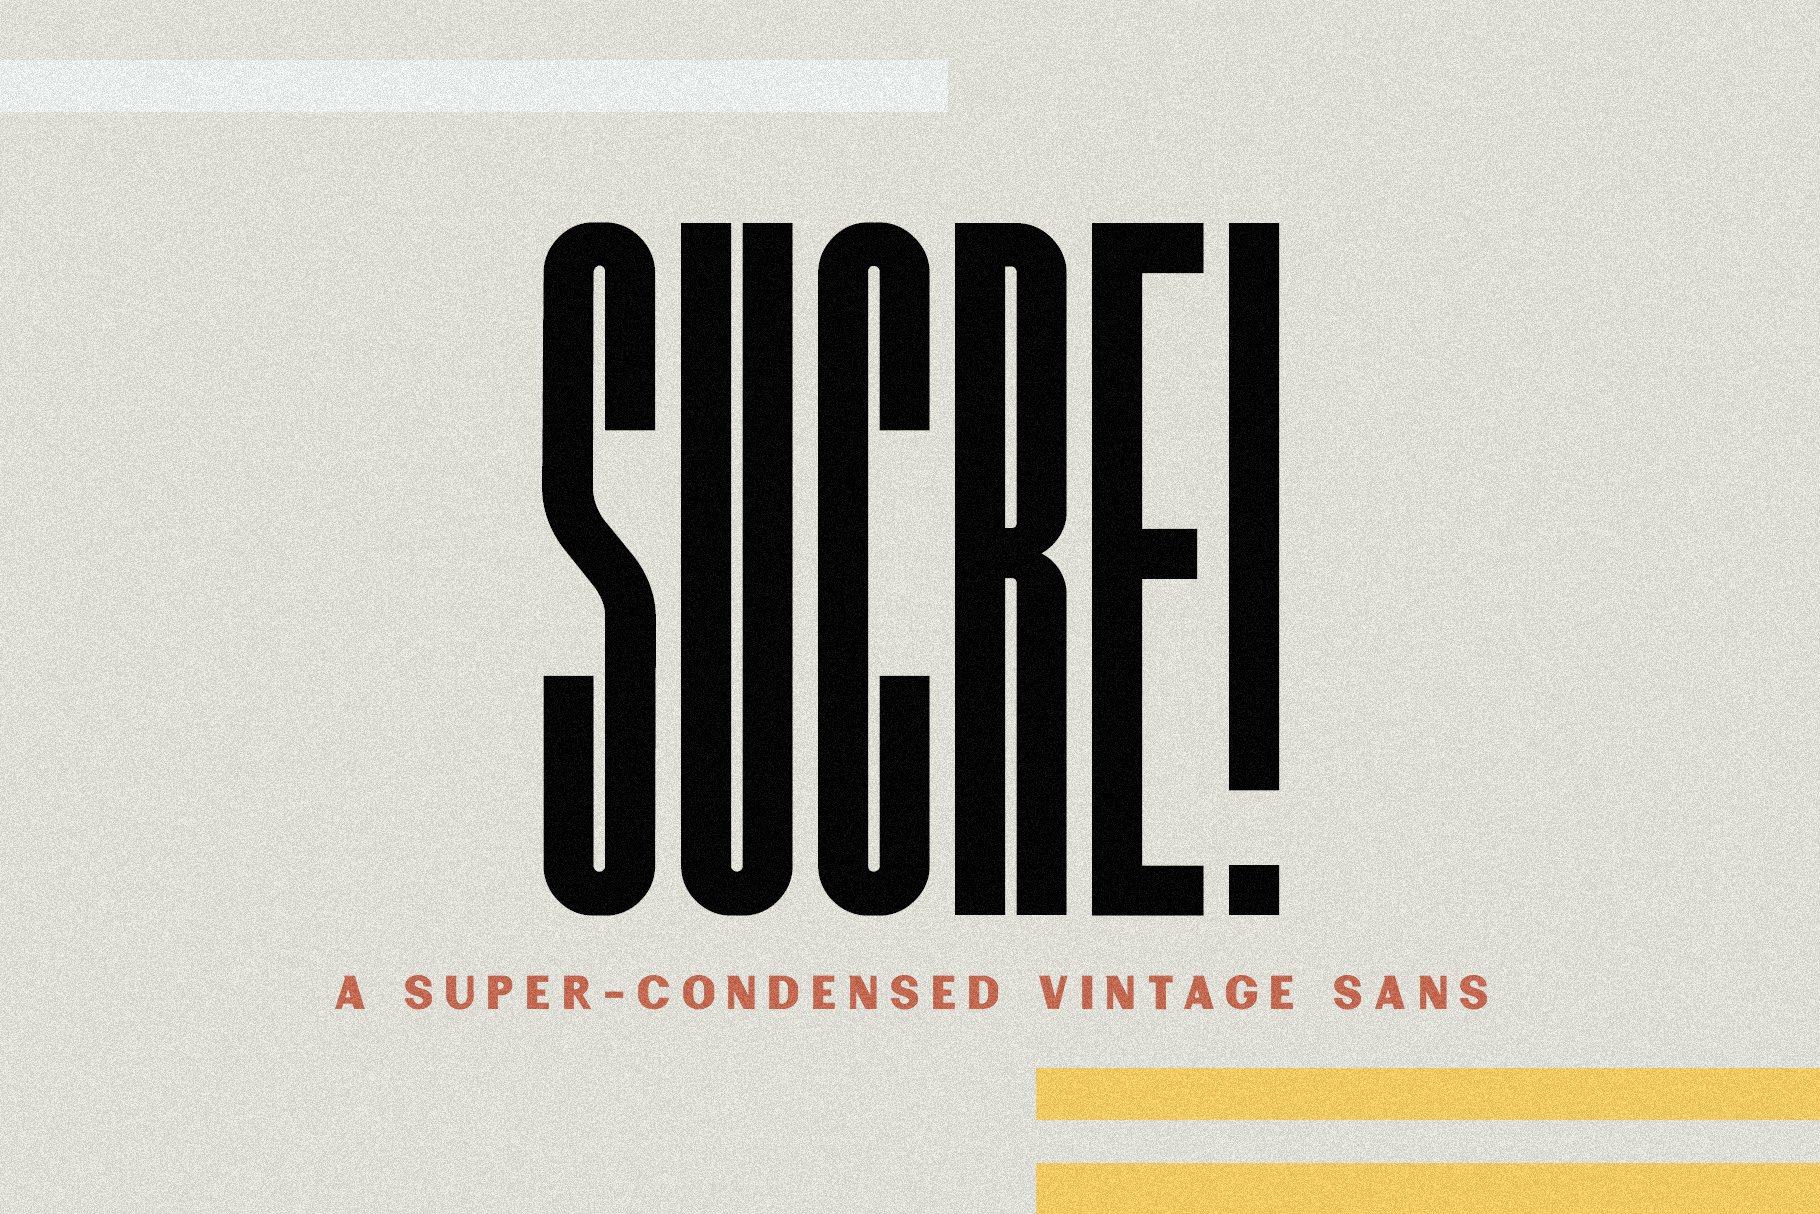 Sucre | Vintage Condensed Sans cover image.